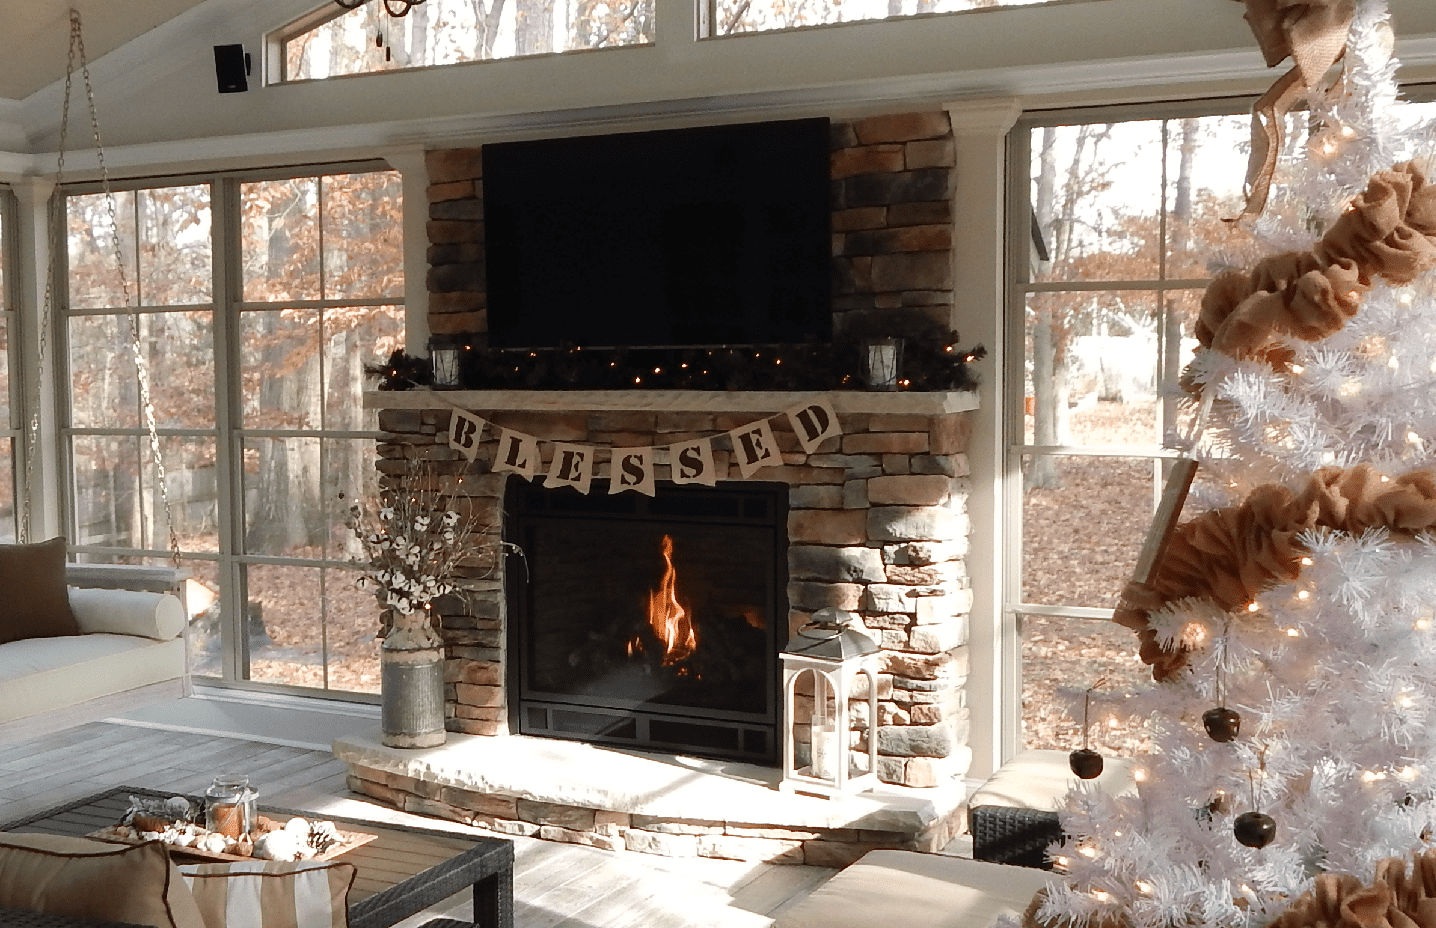 Raleigh 3 season room with fireplace